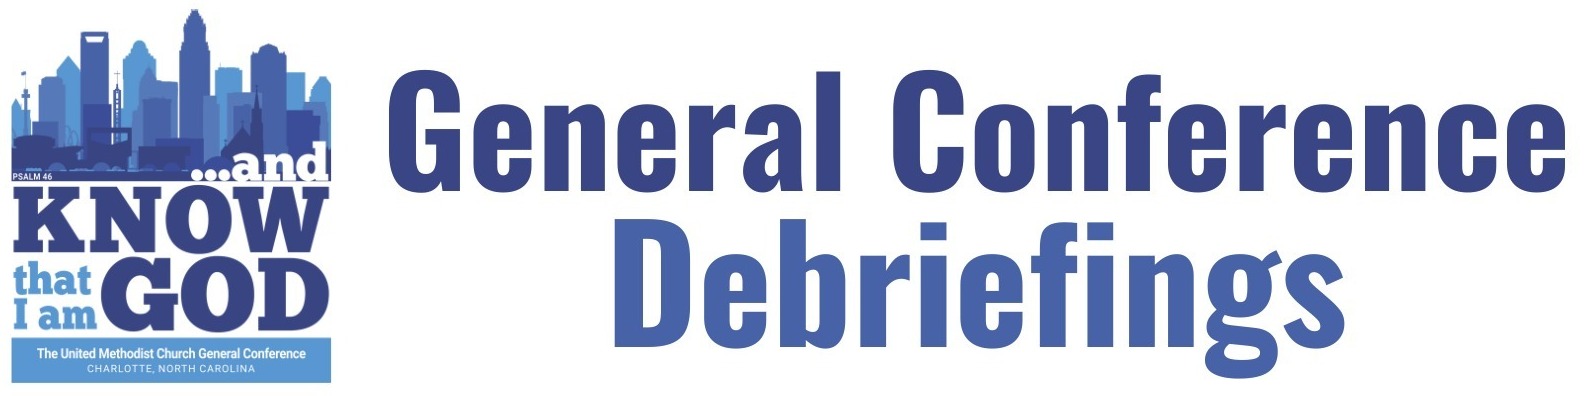 General Conference Debriefings